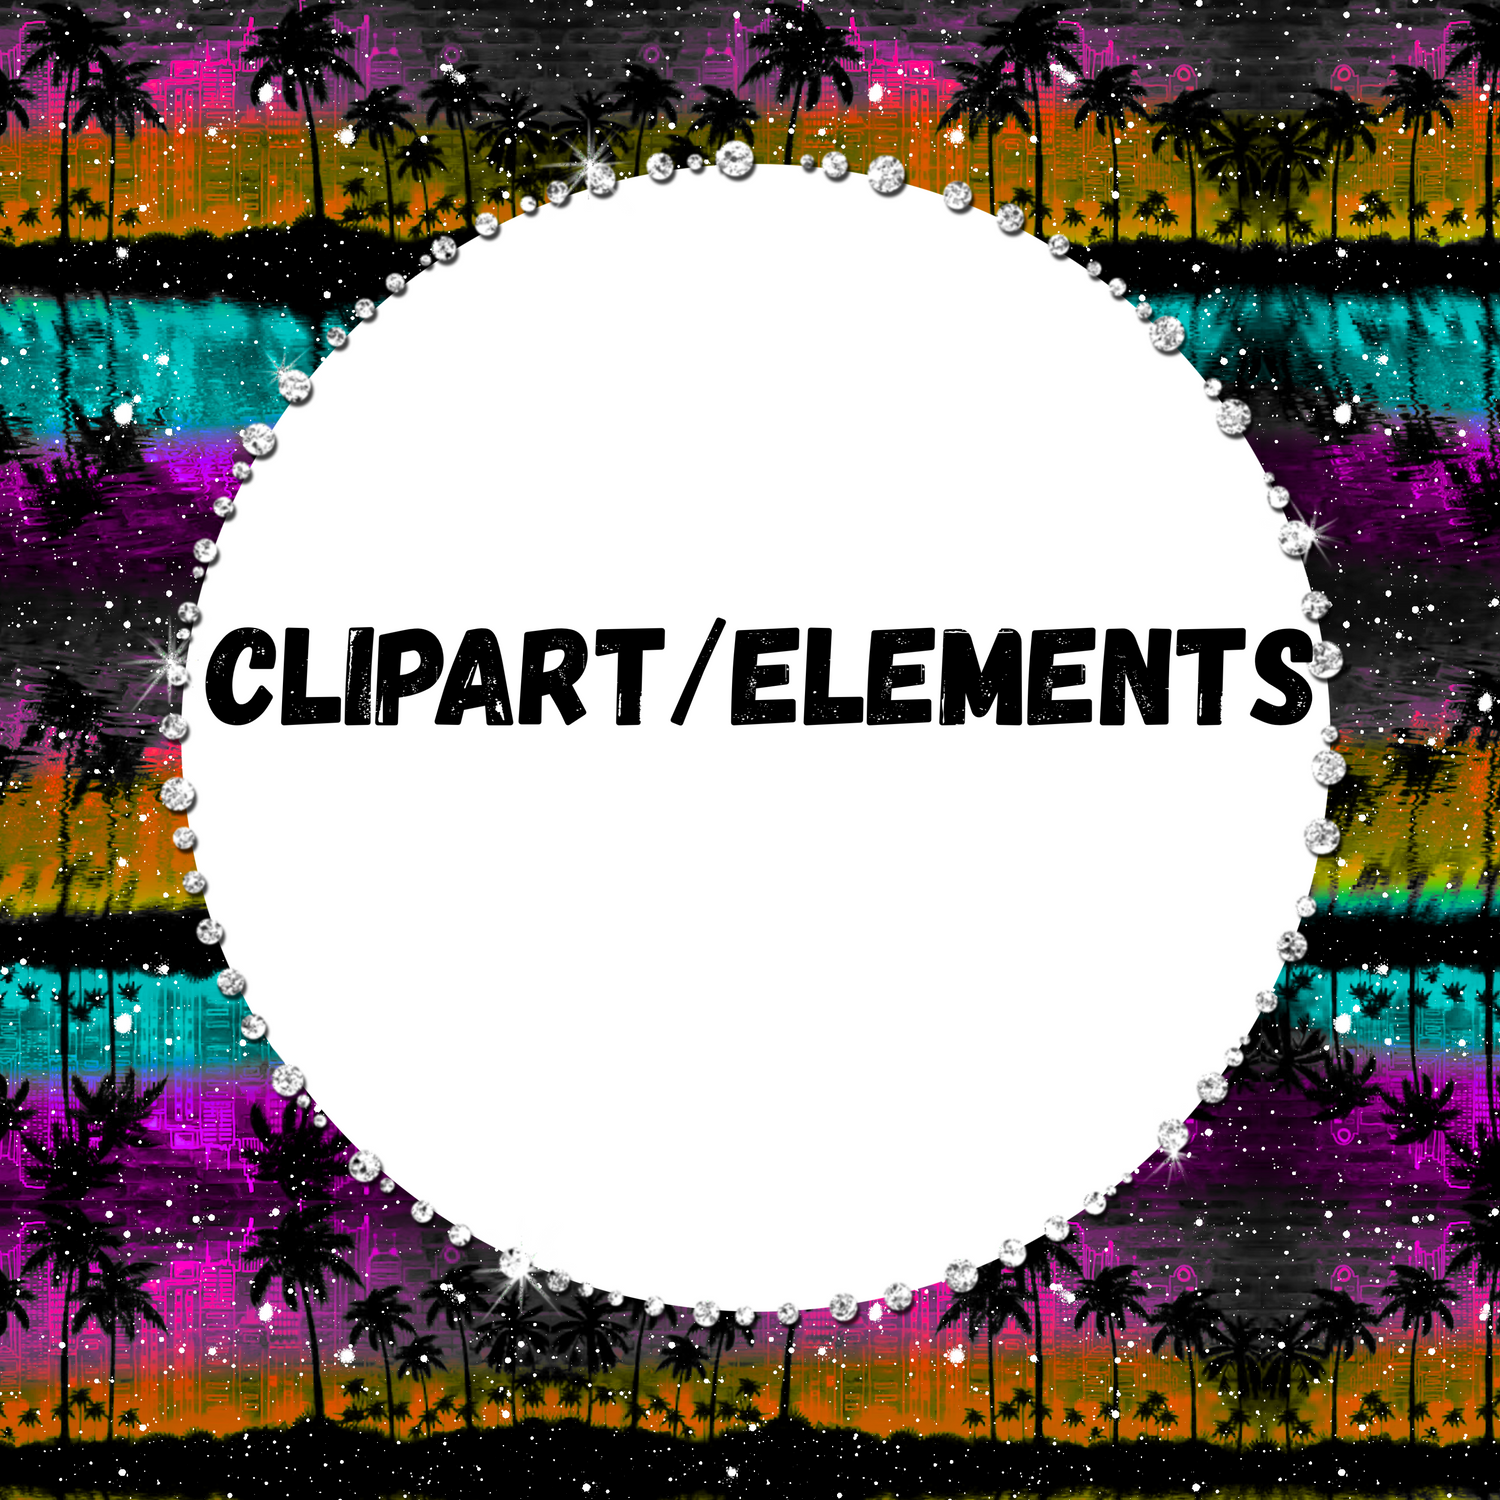 Clipart/Elements